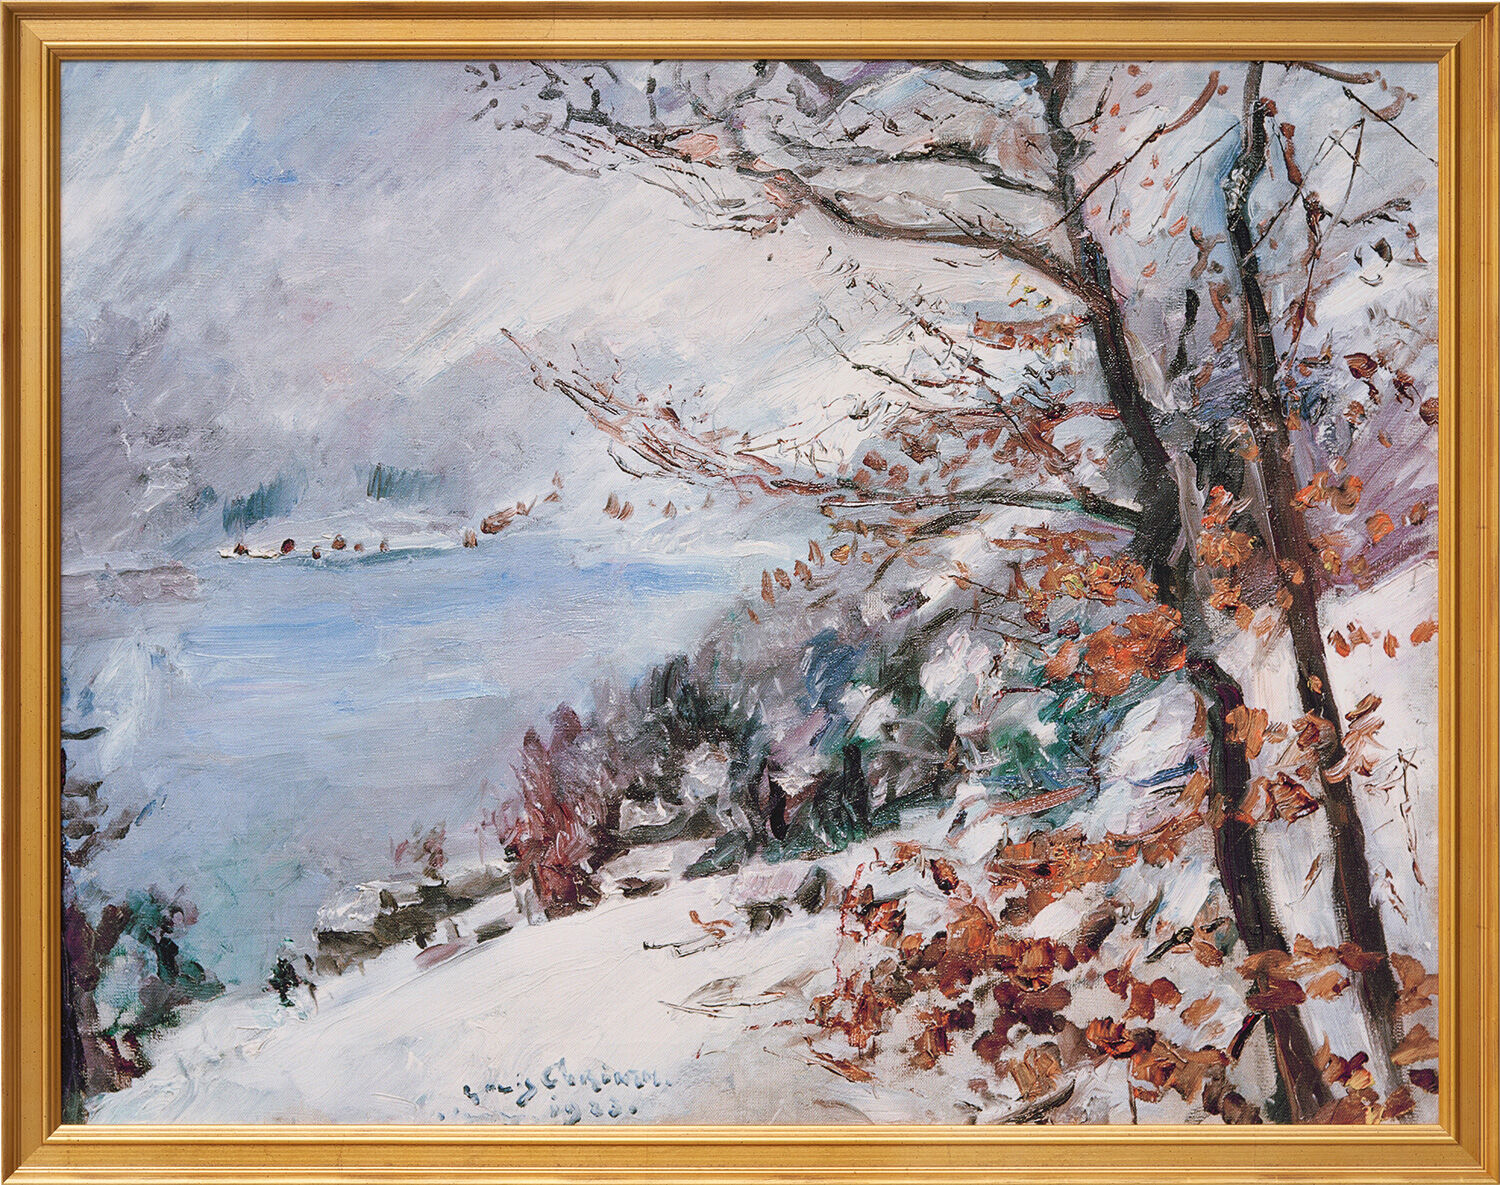 Picture "Walchensee in Winter" (1923), golden framed version by Lovis Corinth